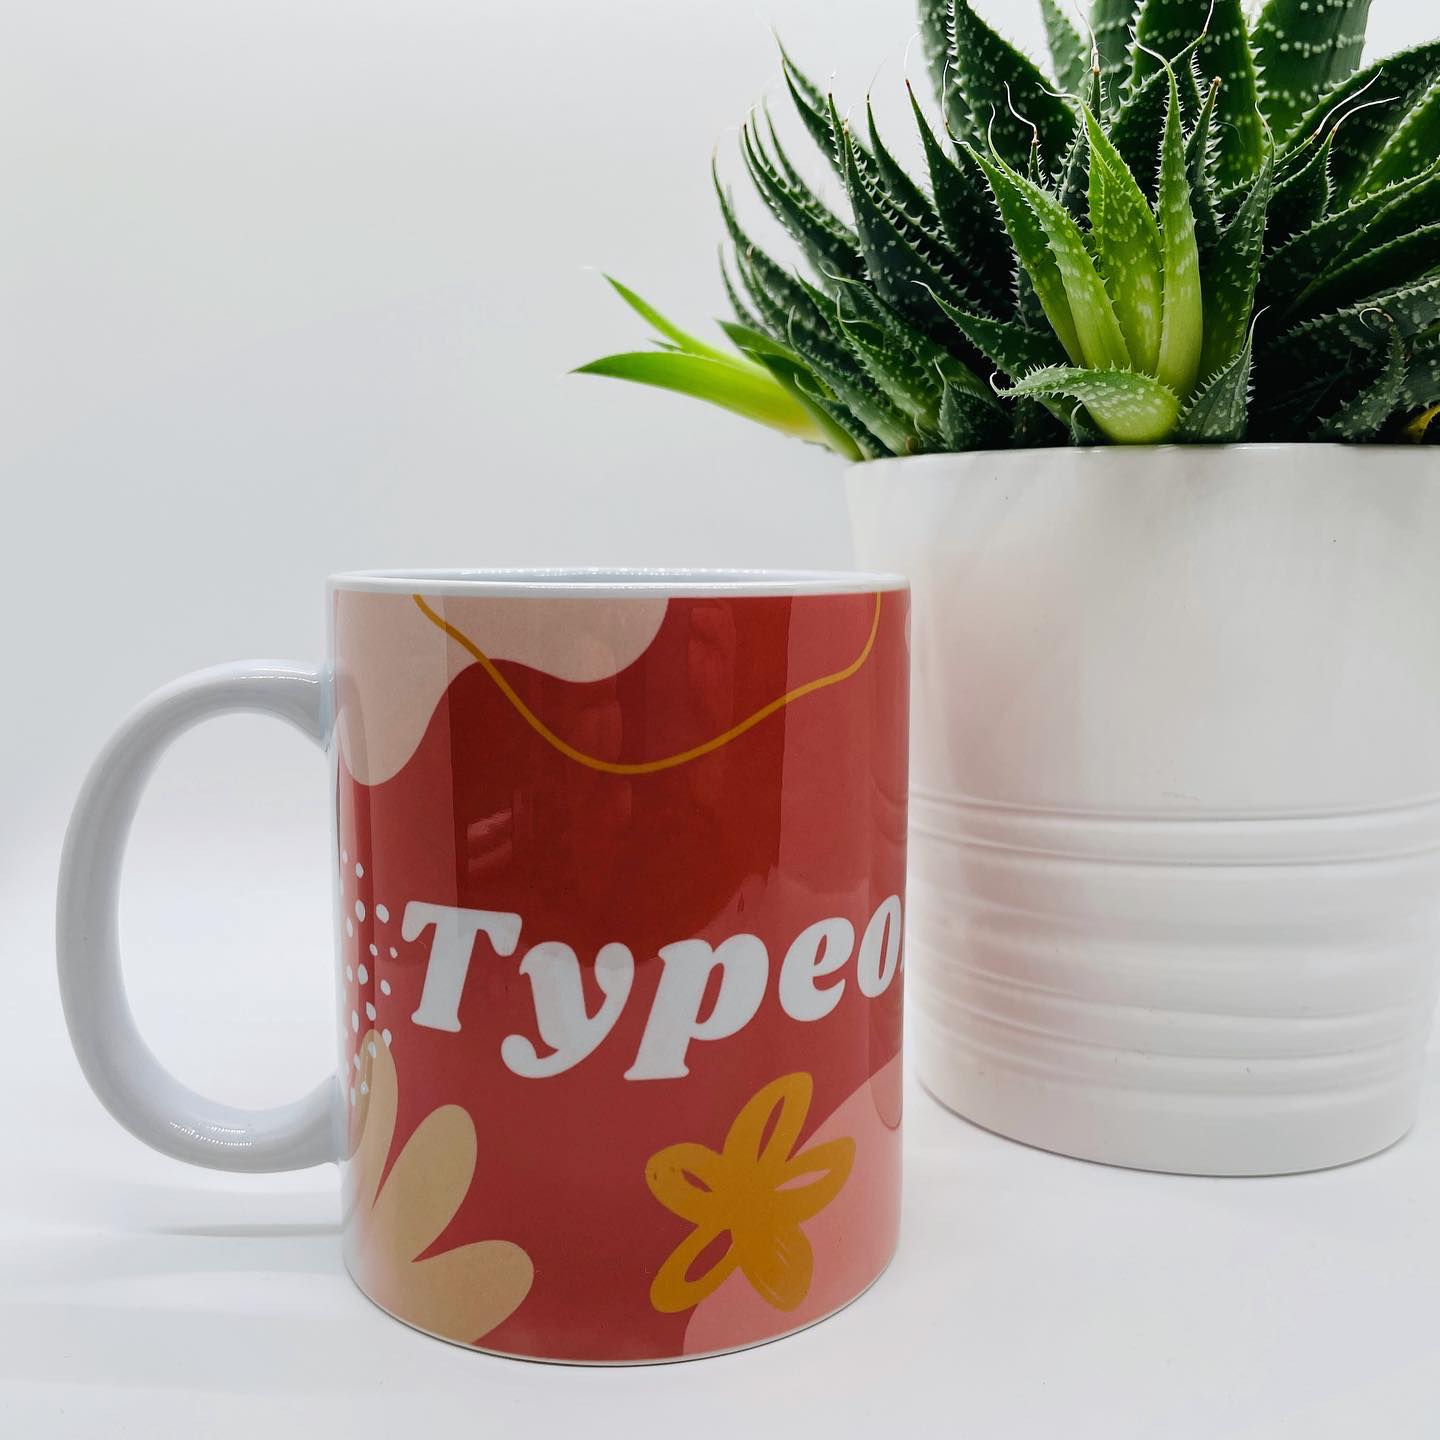 Typeonederful Mug/Cup